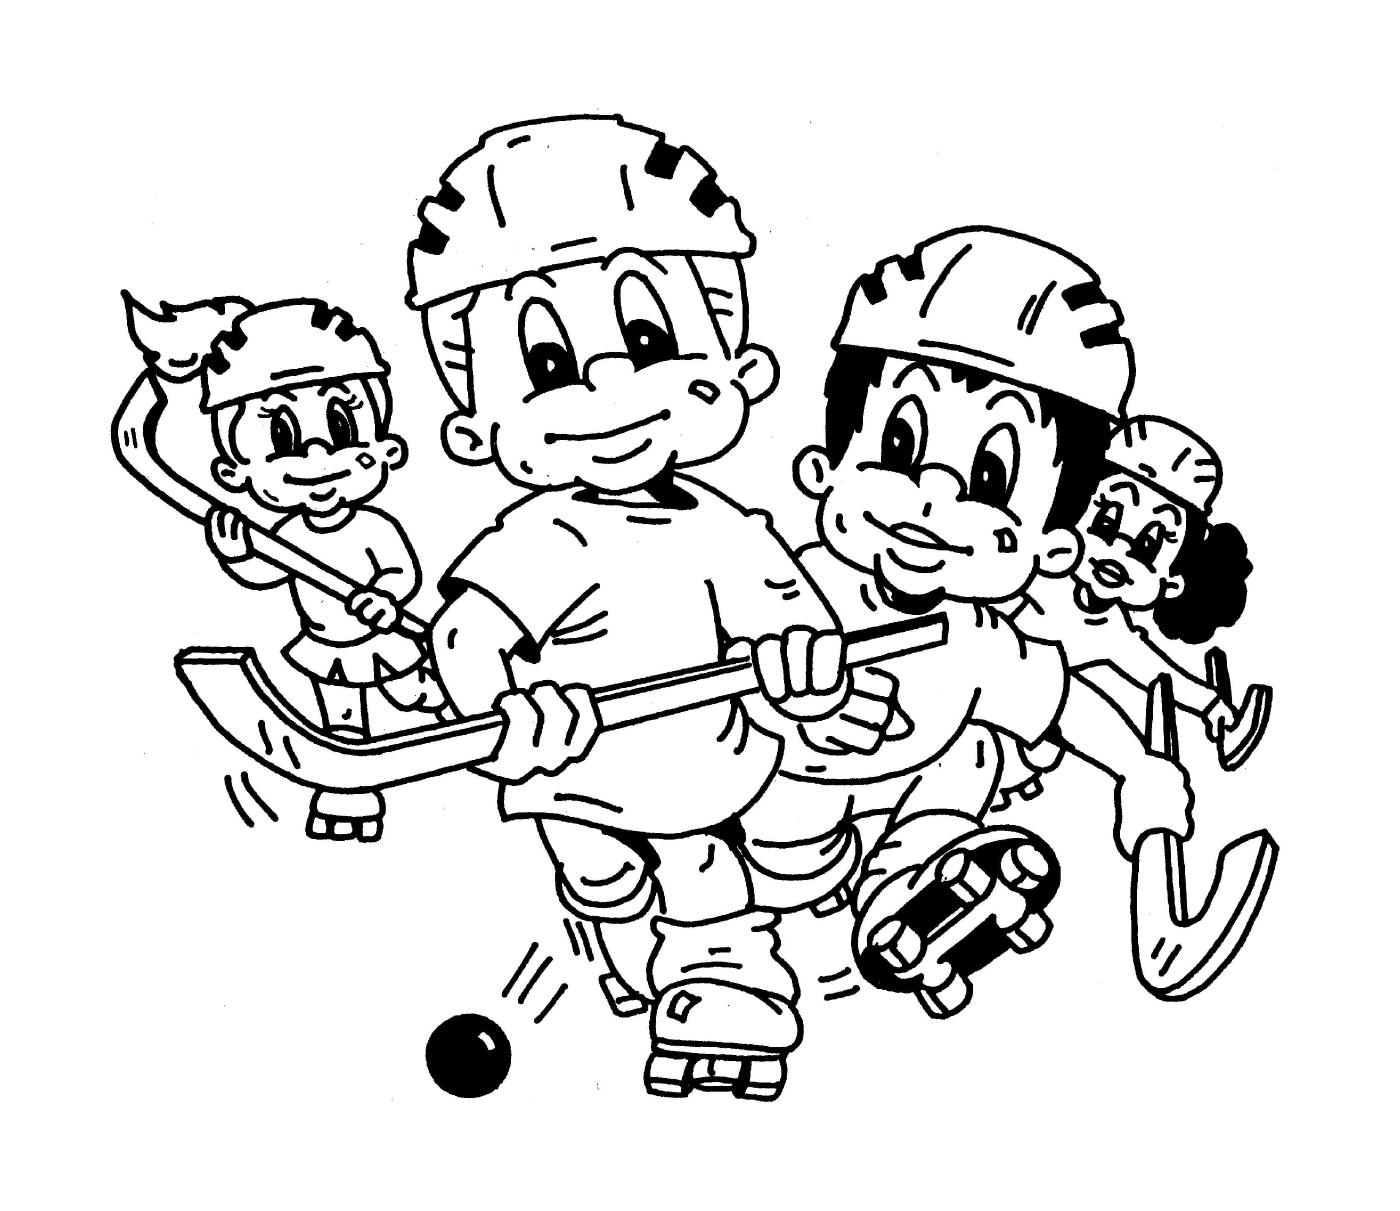 coloriage dessin de hockey enfants fille et garcon